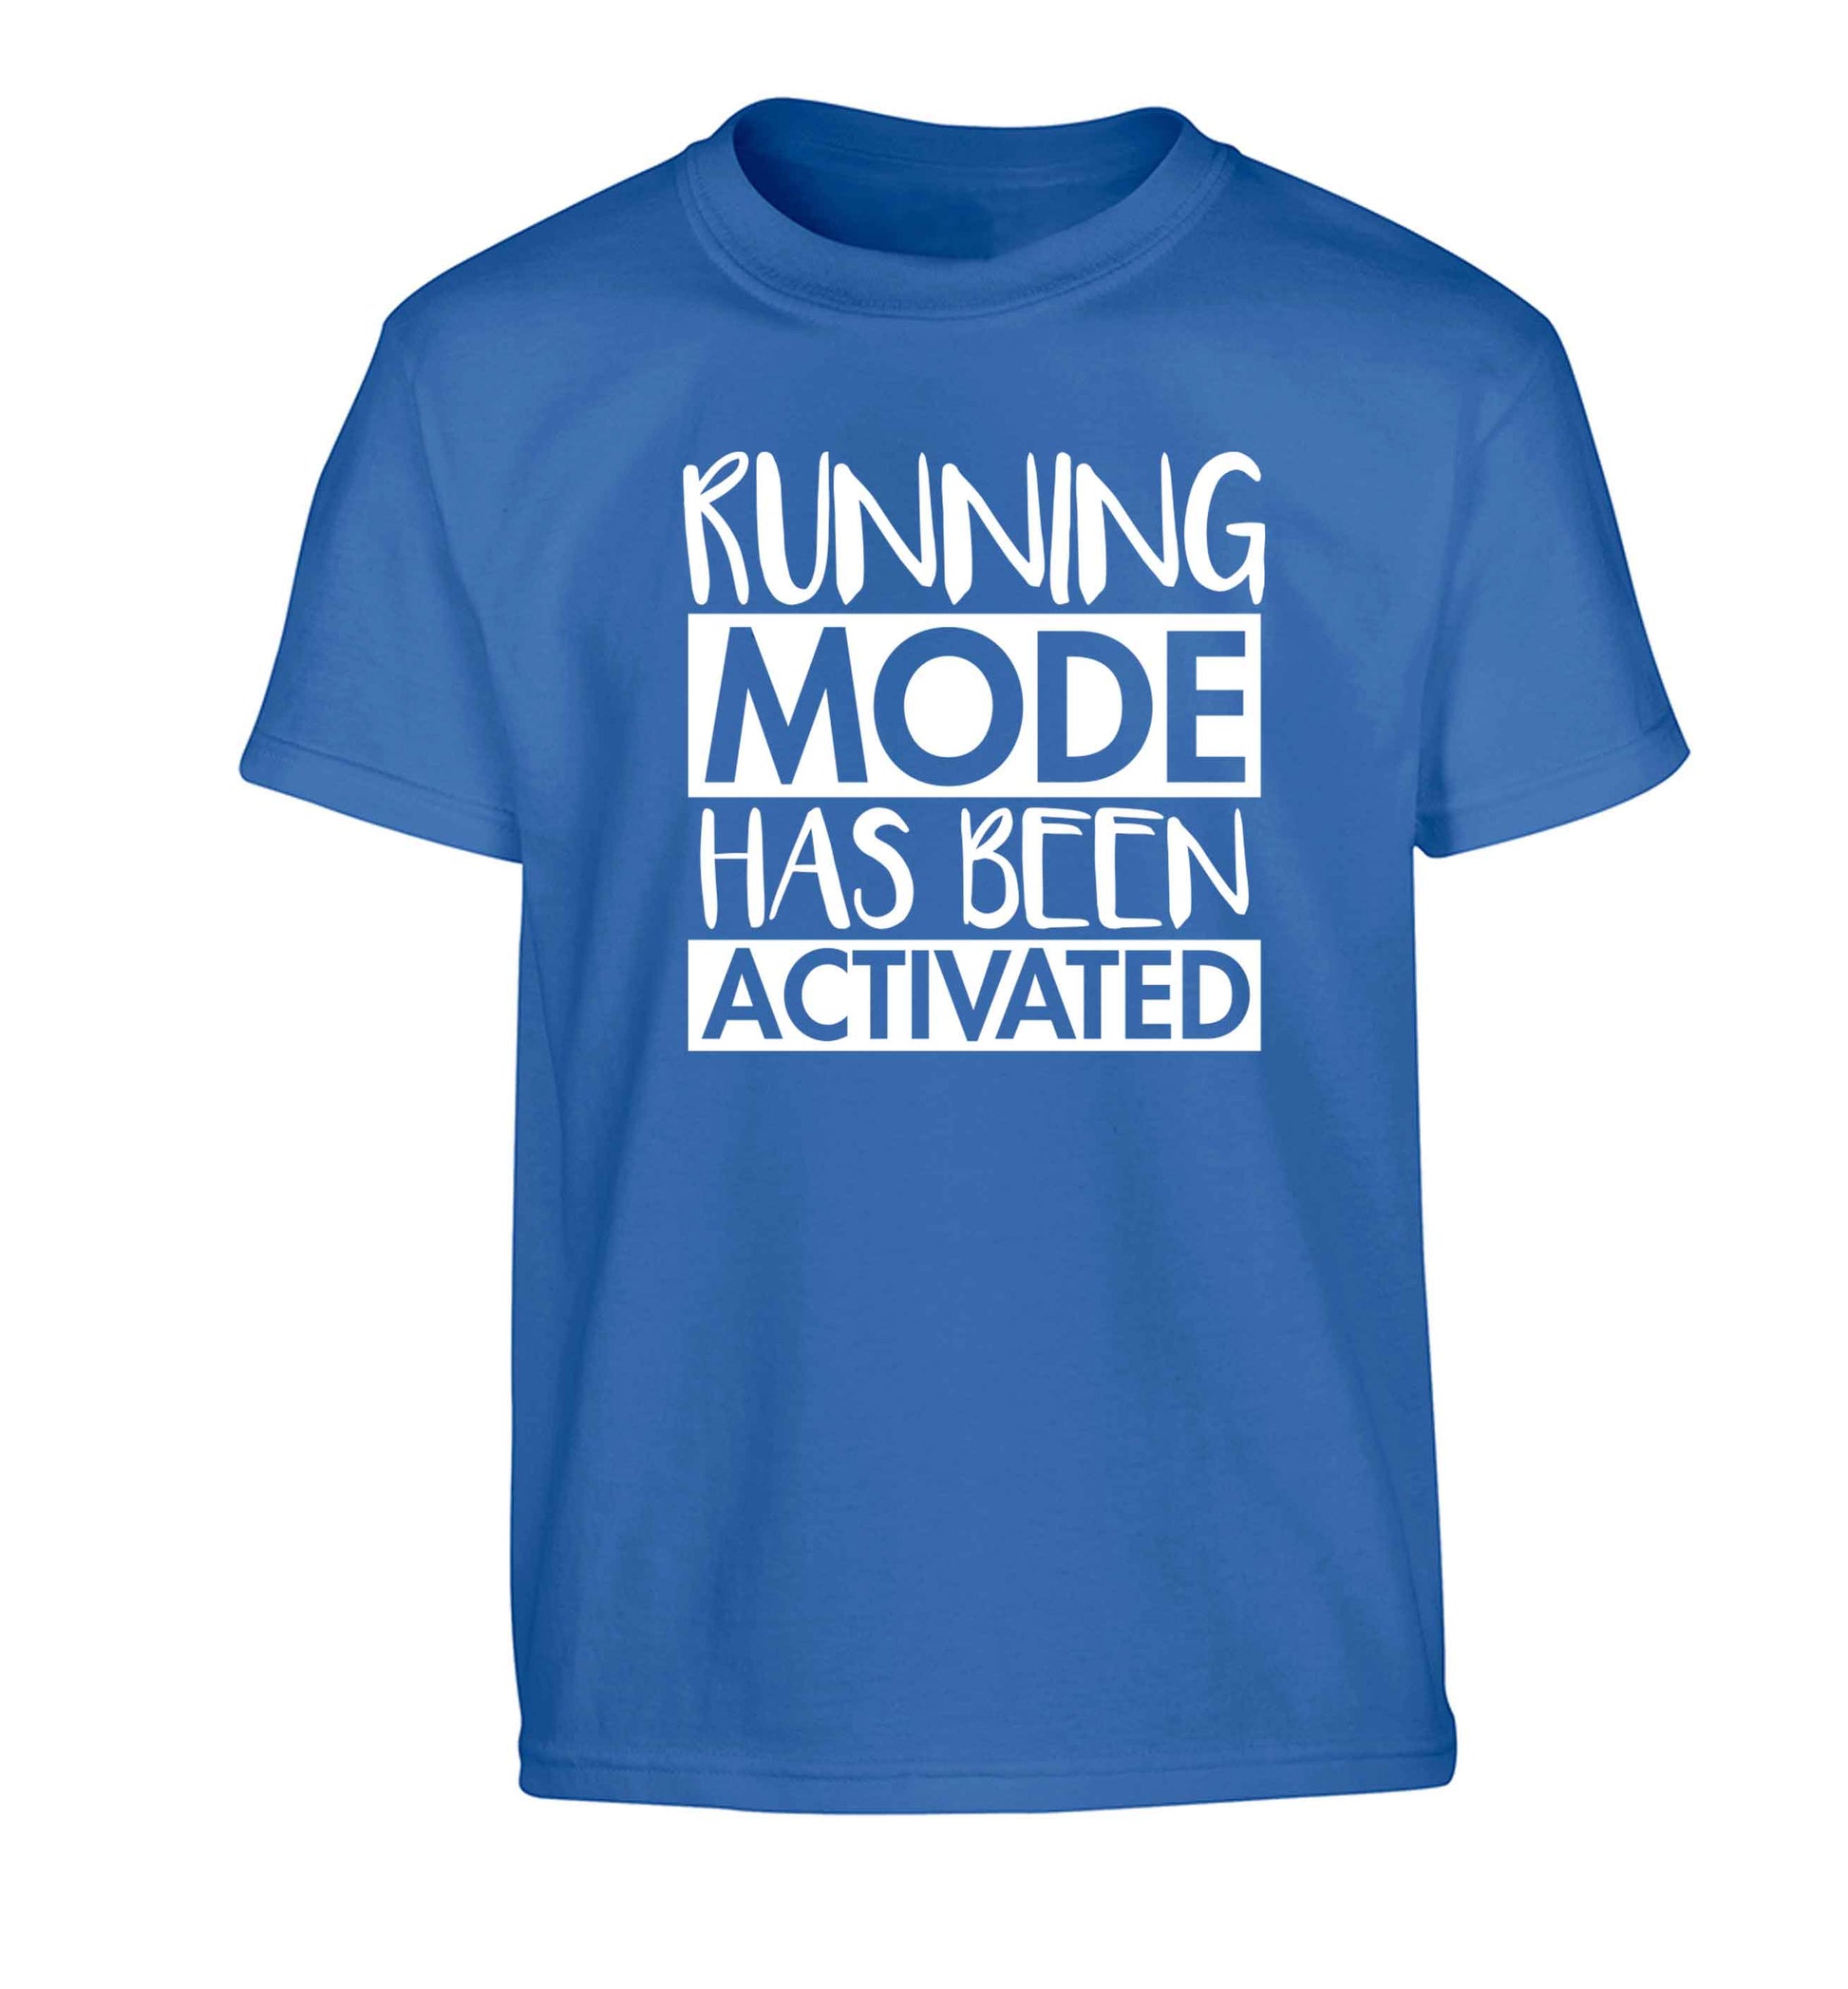 Running mode has been activated Children's blue Tshirt 12-13 Years